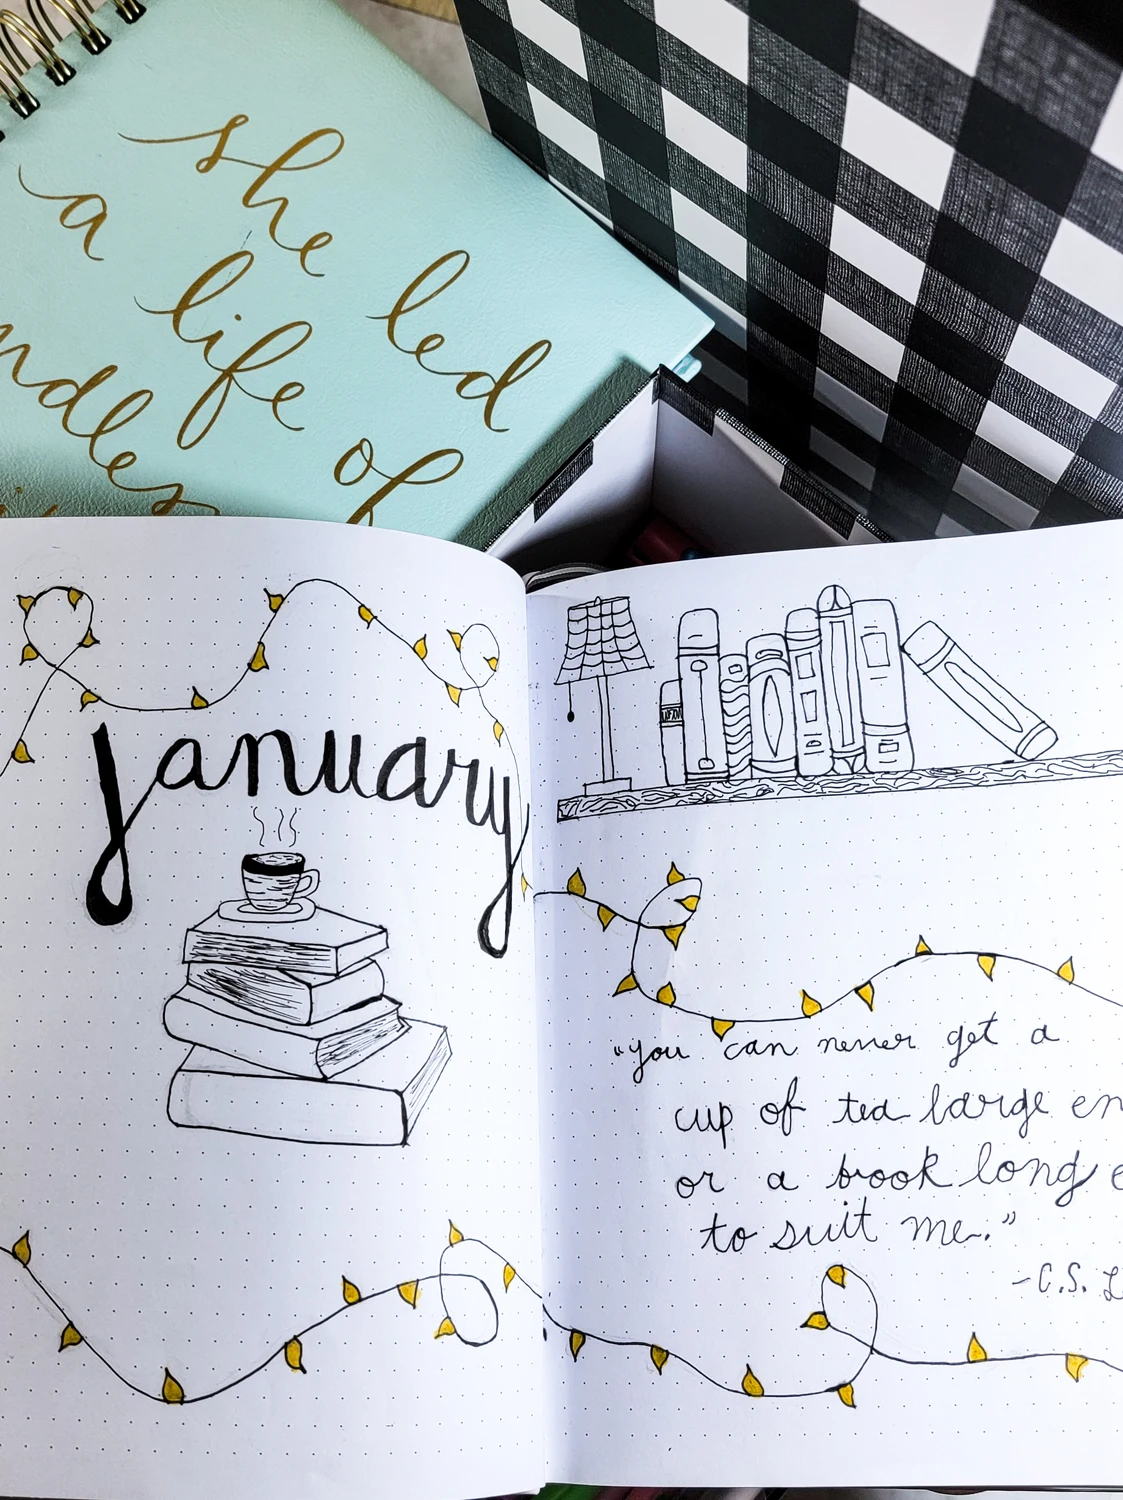 25 Best Pens and Markers for Your Bullet Journal — Joyful Journaler